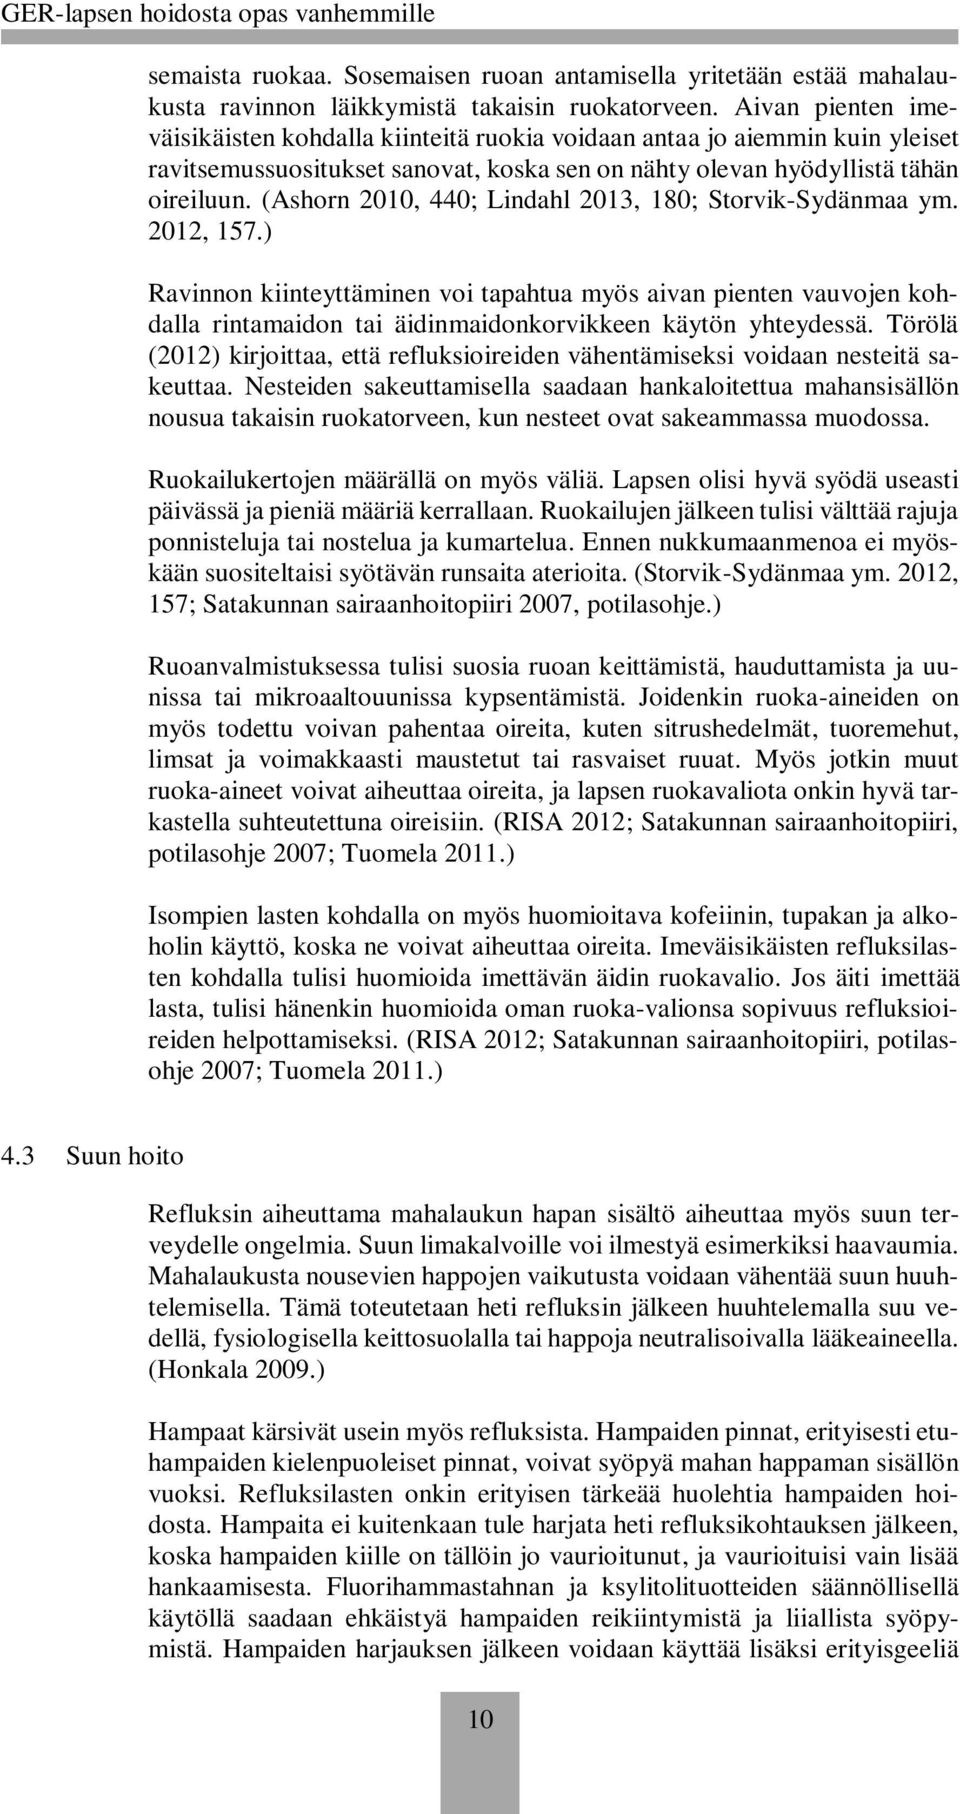 (Ashorn 2010, 440; Lindahl 2013, 180; Storvik-Sydänmaa ym. 2012, 157.